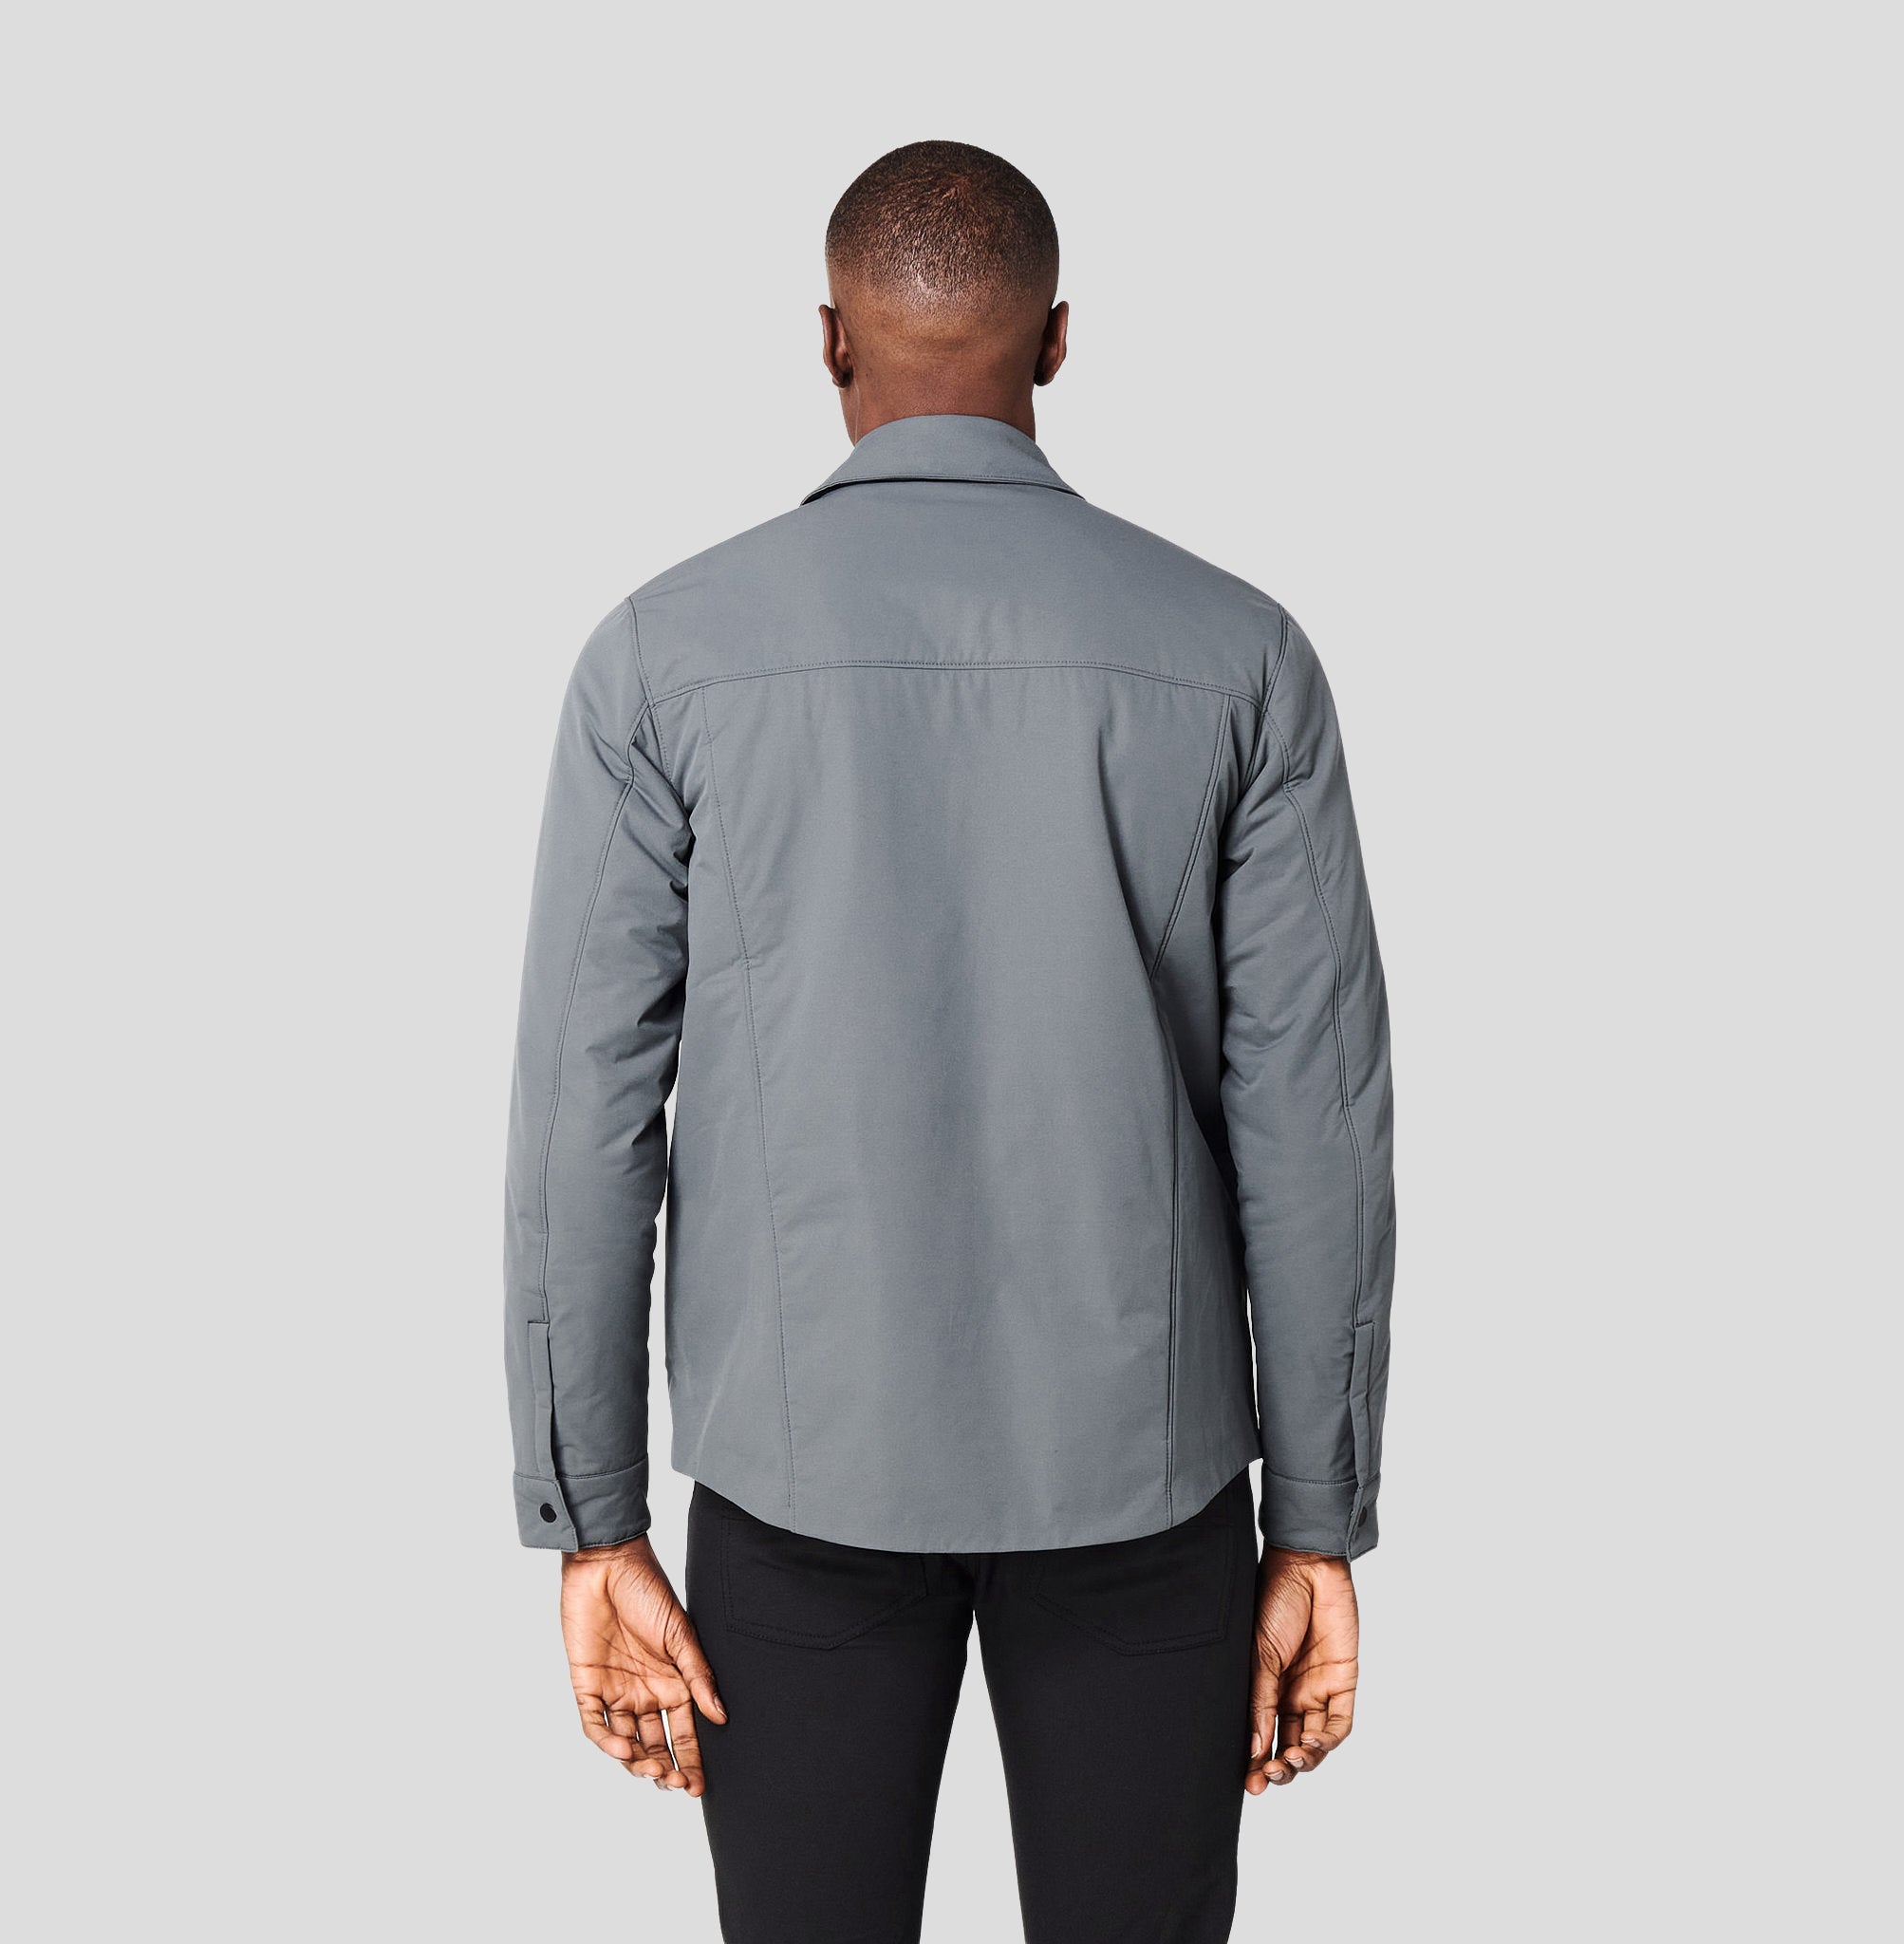 AirLoft Shirt Jacket - Blue grey
